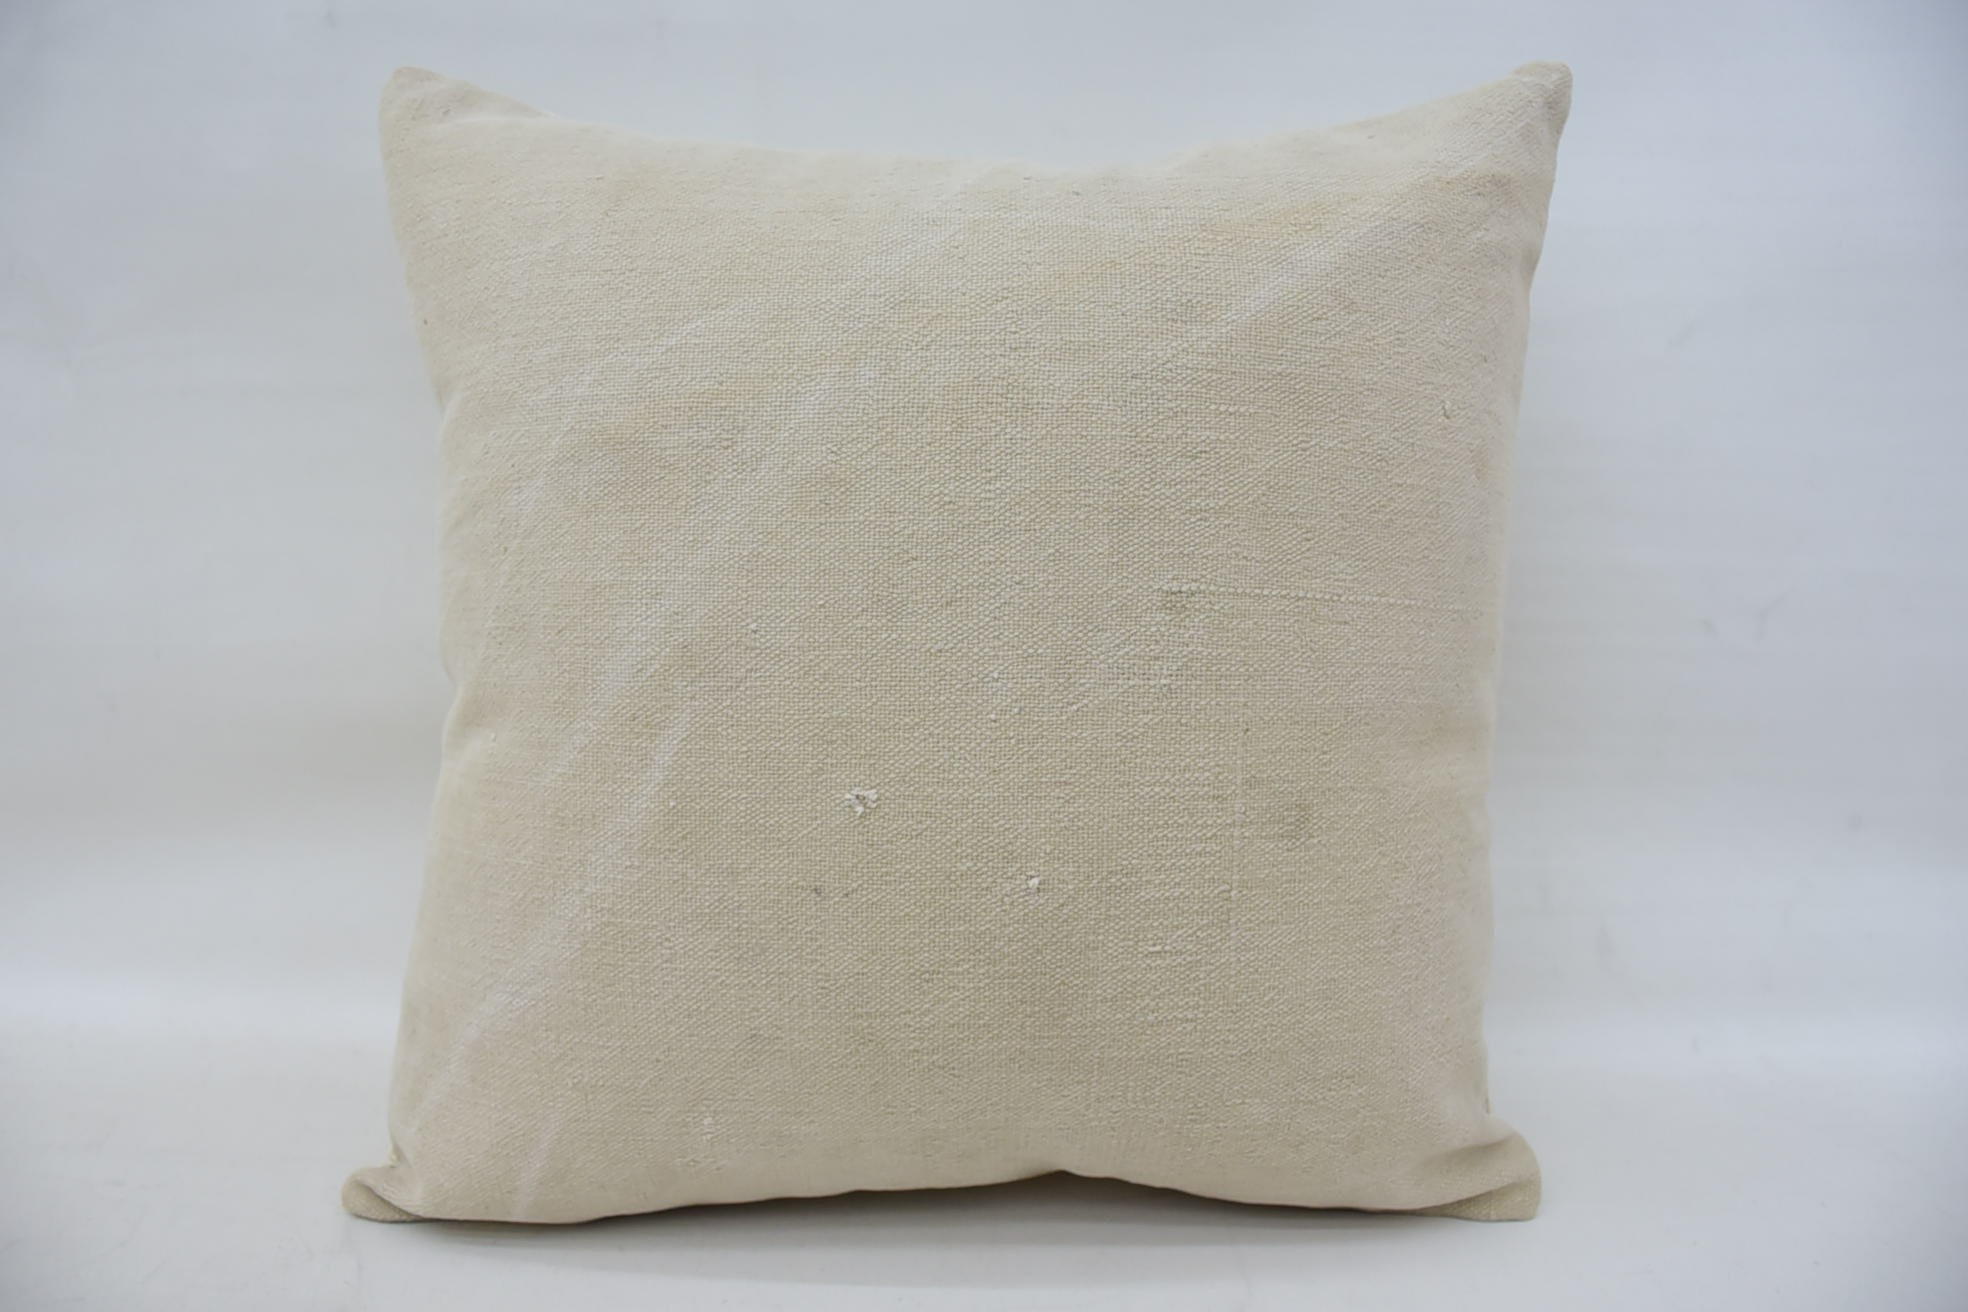 Vintage Pillow, 18"x18" Beige Pillow Cover, Decorative Cushion, Wool Kilim Pillow Cushion Cover, Pillow for Couch, Throw Kilim Pillow